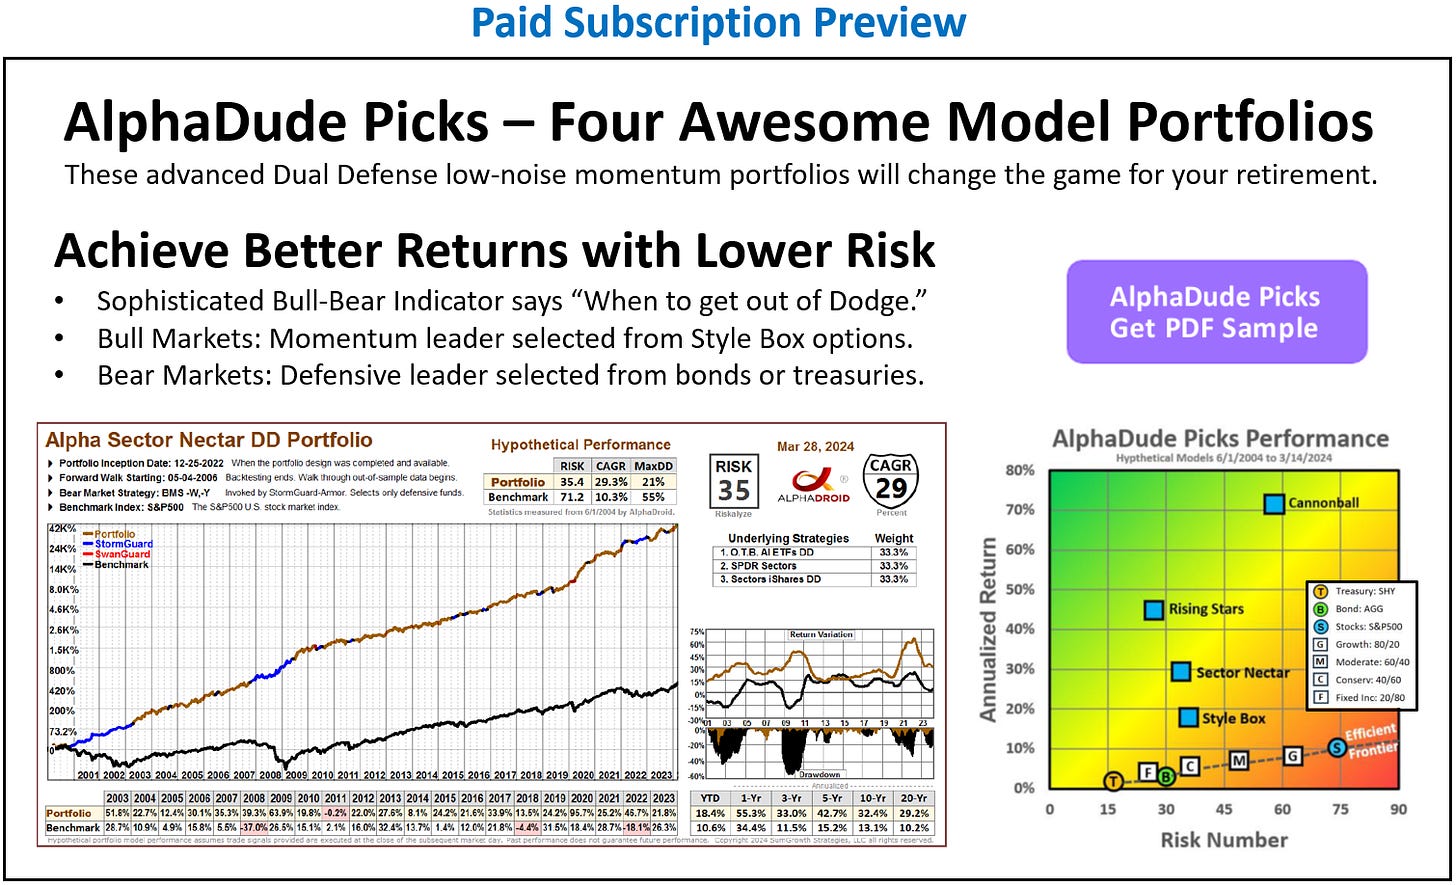 AlphaDude Picks Subscription Preview Dual Defense momentum Portfolios